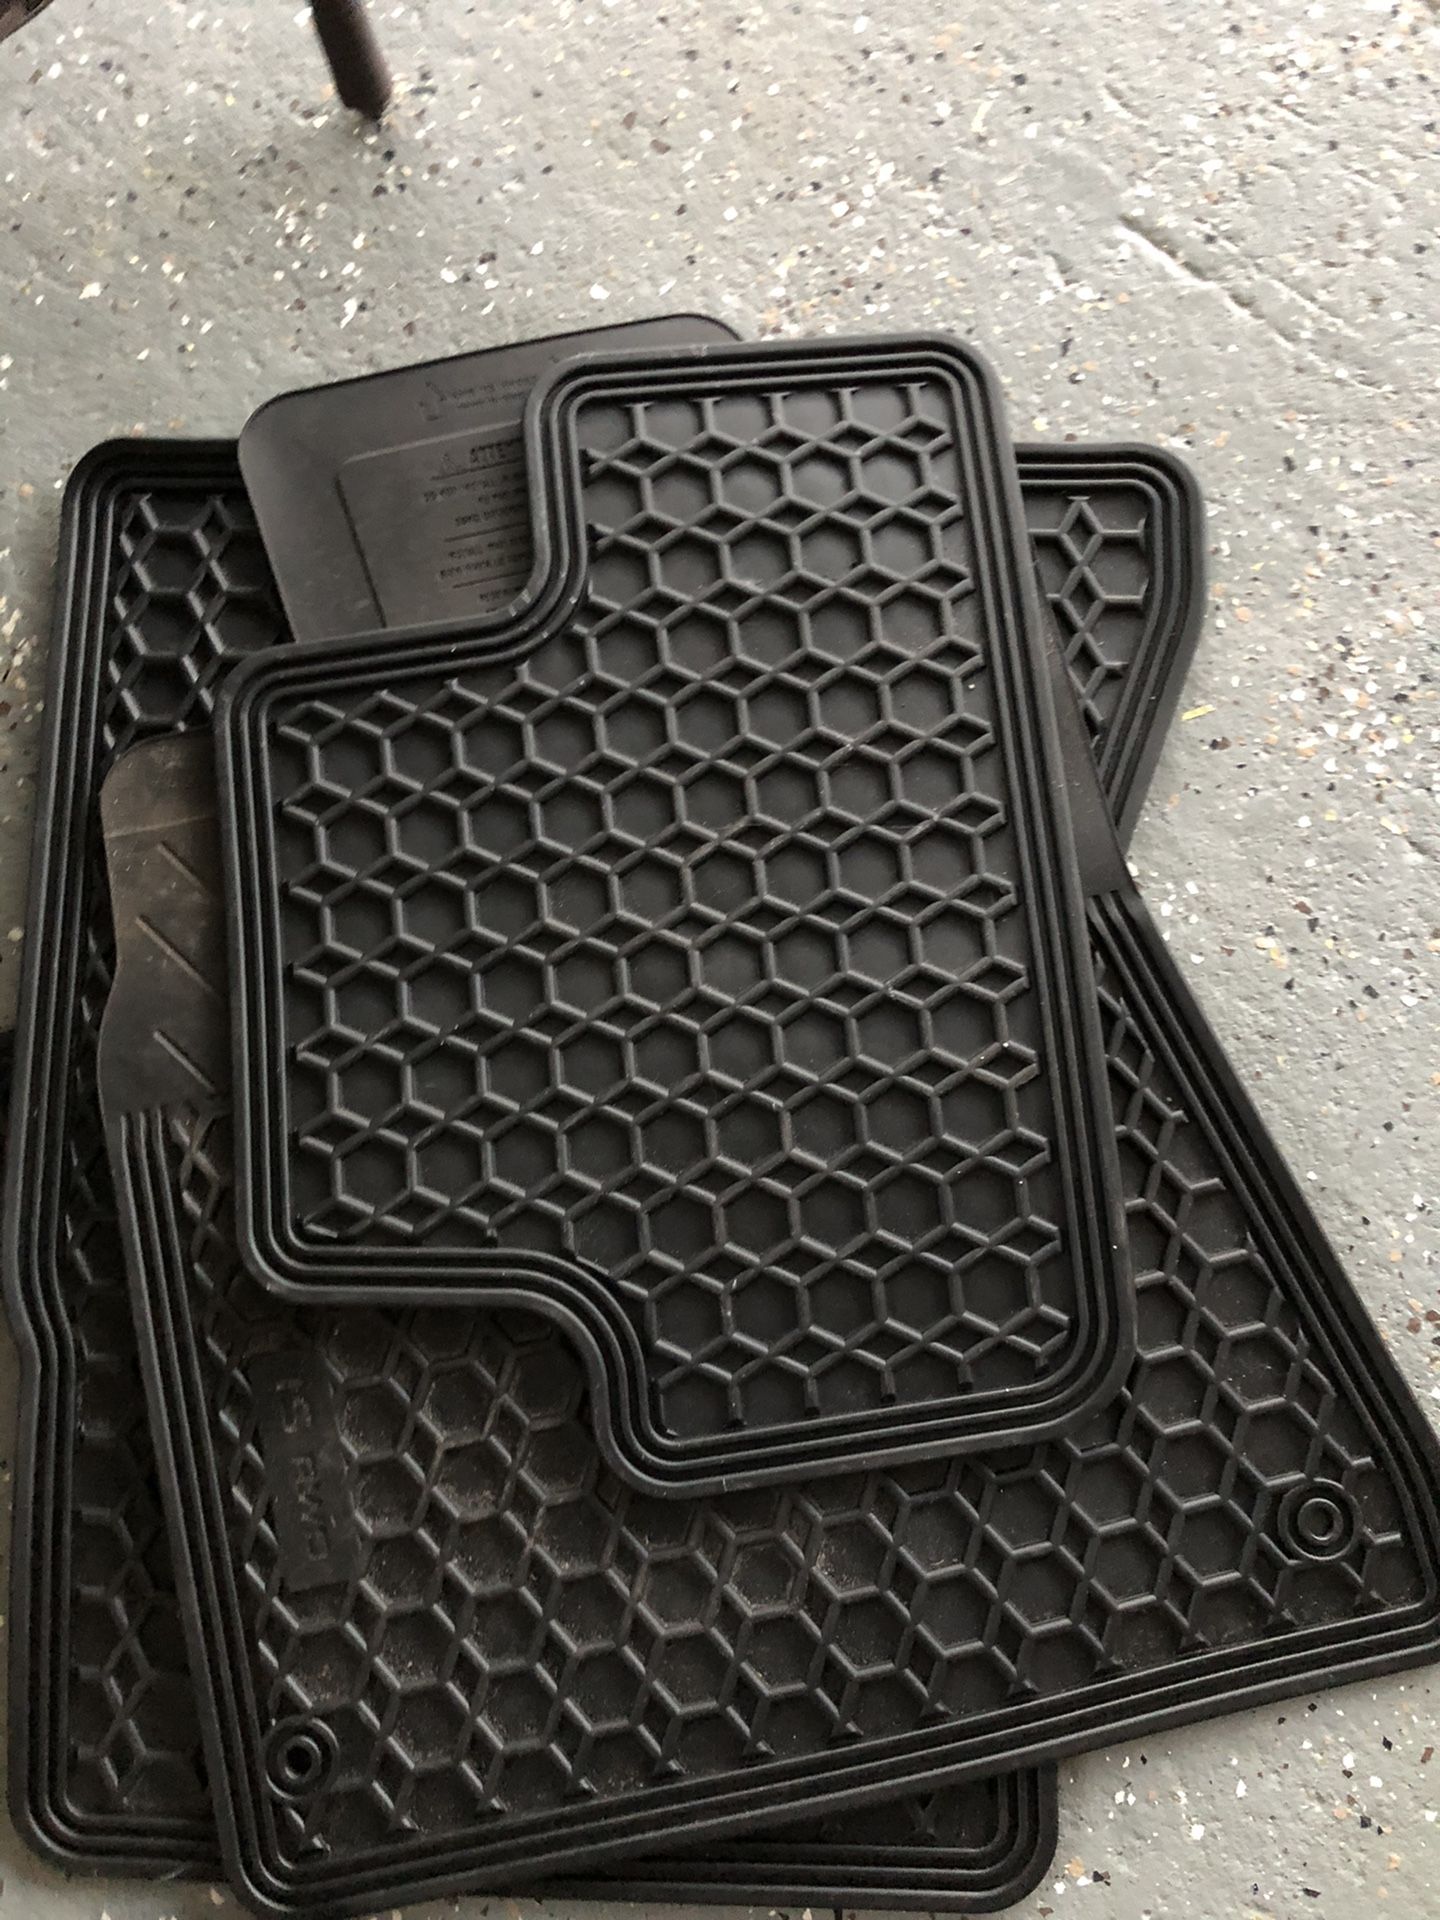 OEM Lexus rubber weather proof mats